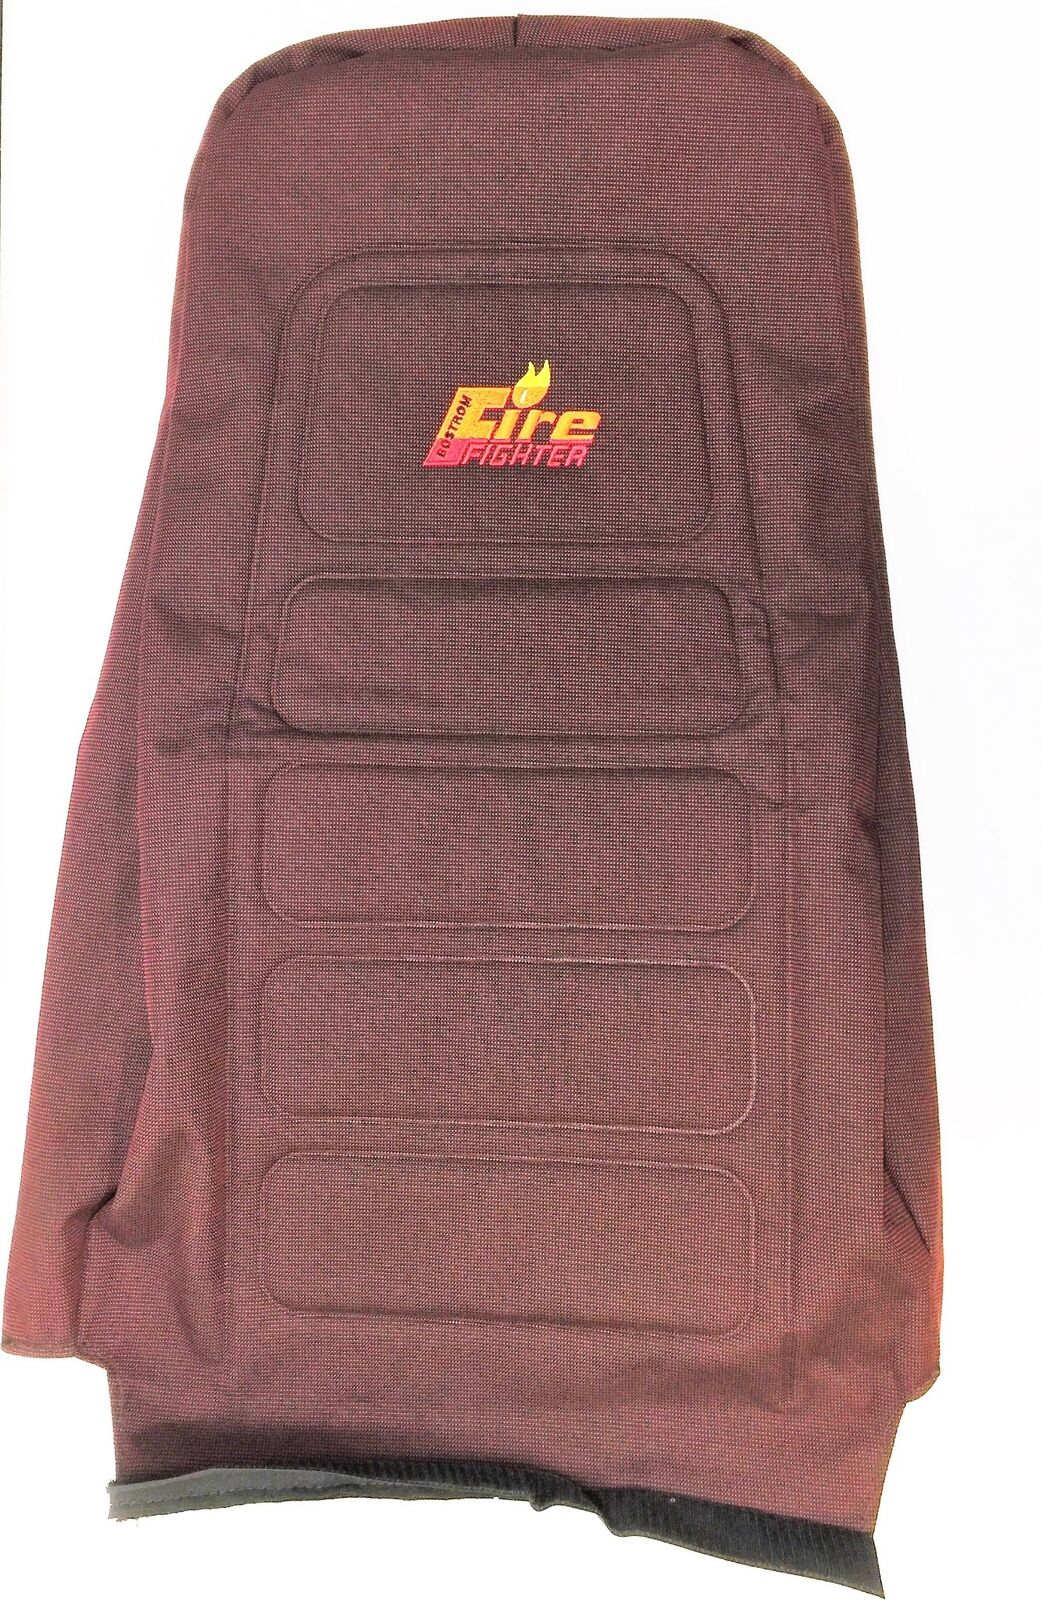 BOSTROM Fire Fighter Seat Back Cover w/ Velcro Enclosure 8016-5807F NOS